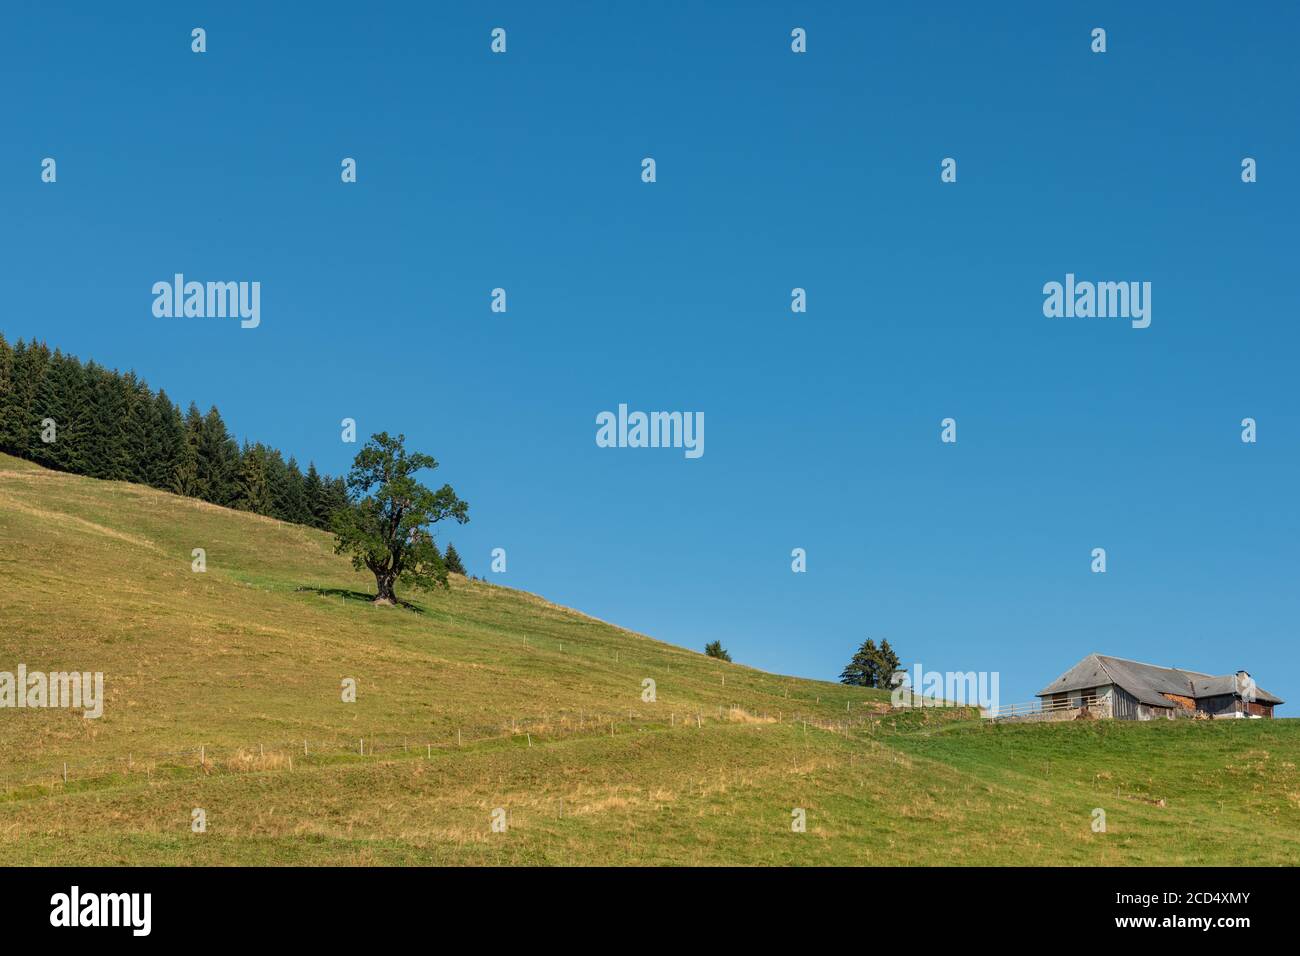 A minimal Swiss landscape with a blue sky, Switzerland Stock Photo